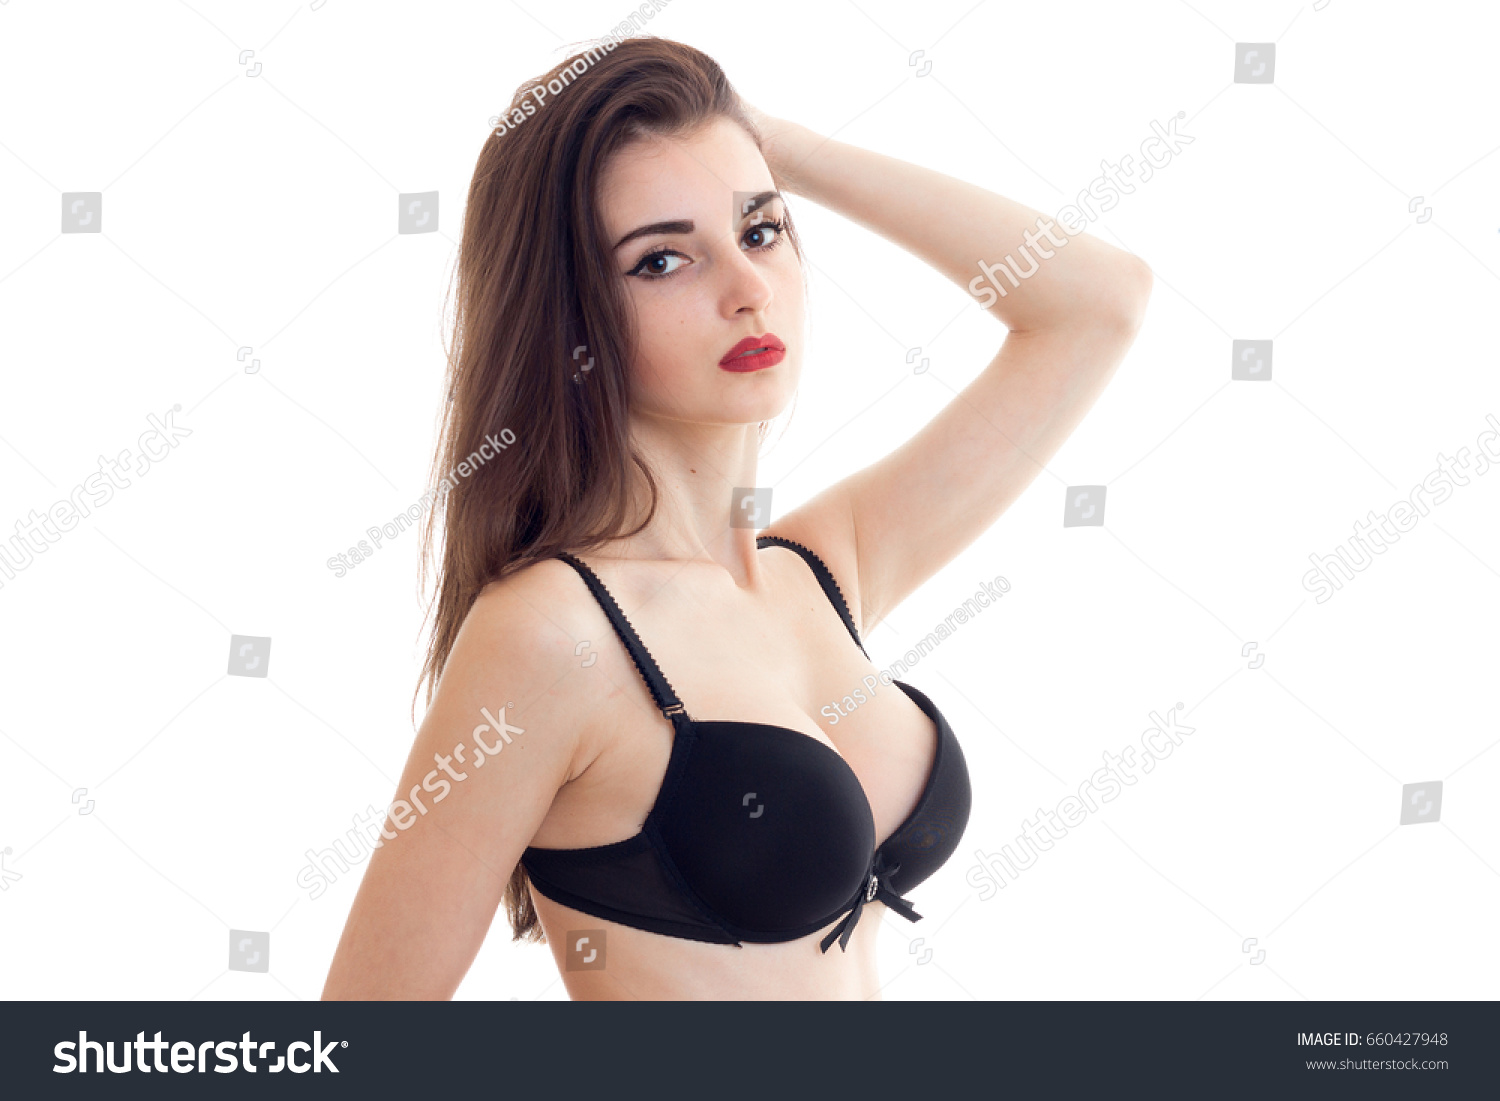 ashish shroff recommends black big natural tits pic